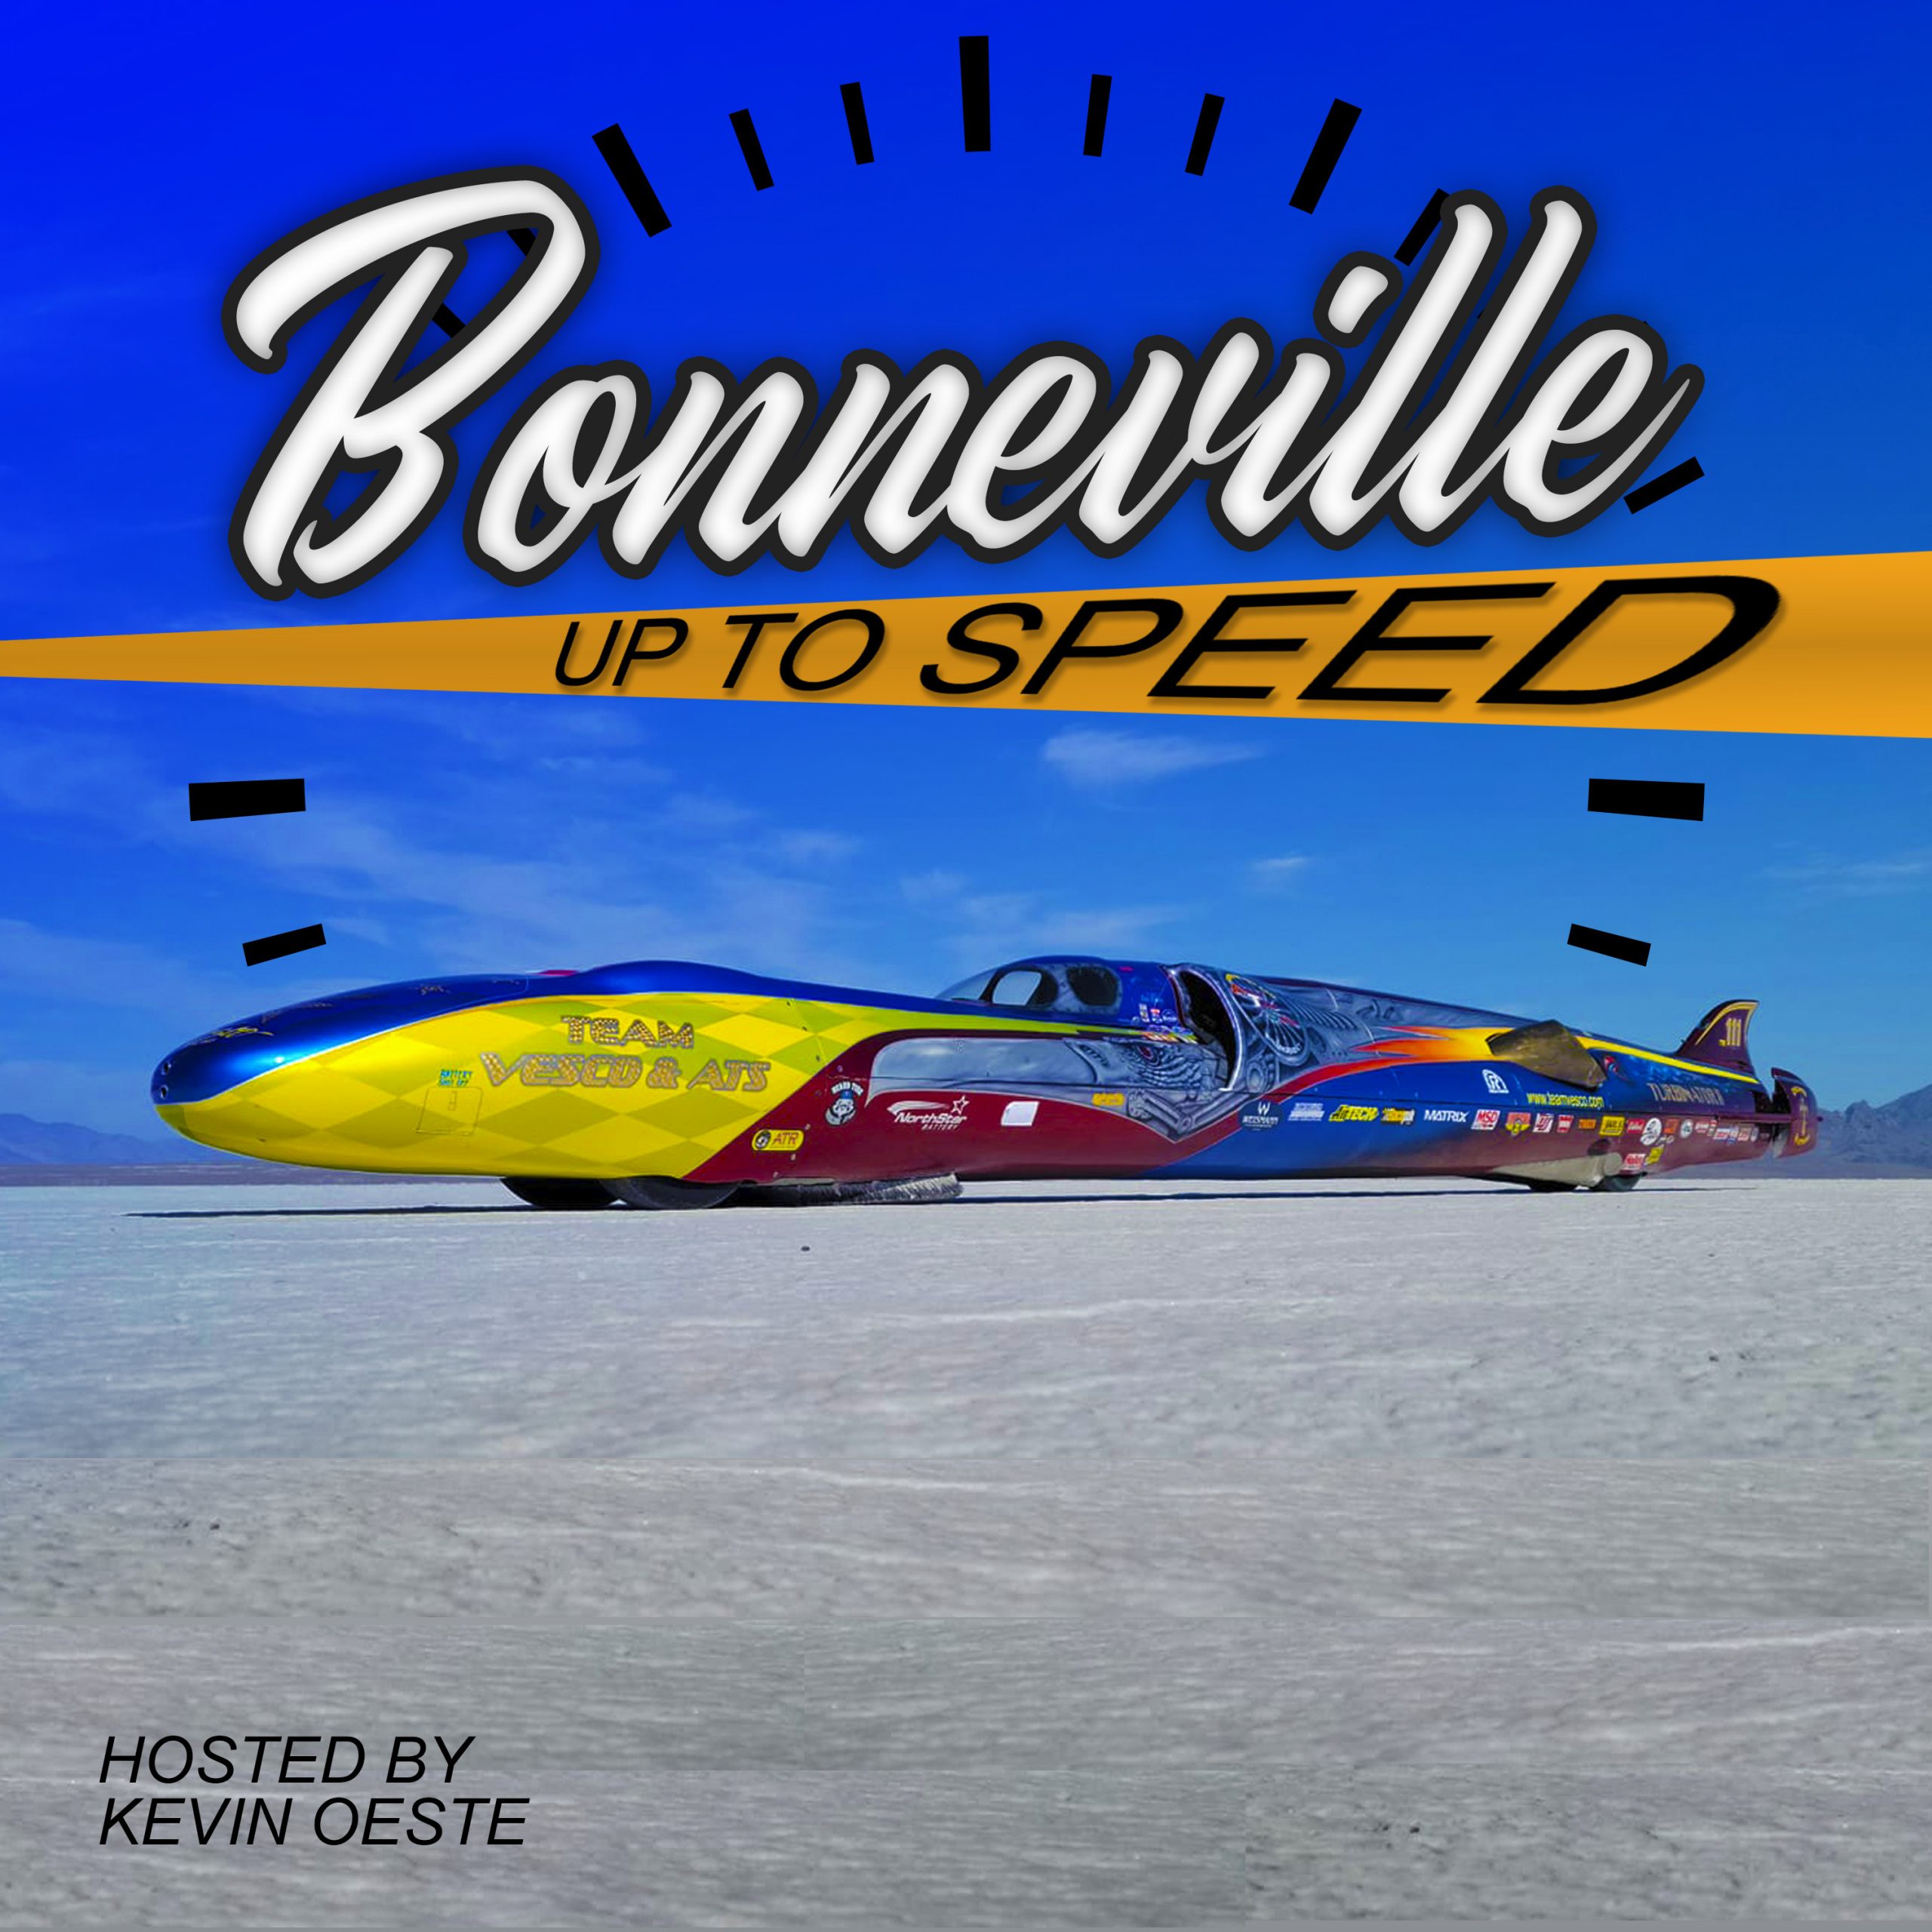 Scott Clark on tuning the Team Vesco Turbine Powered Streamliner on the Bonneville Up To Speed Podcast!